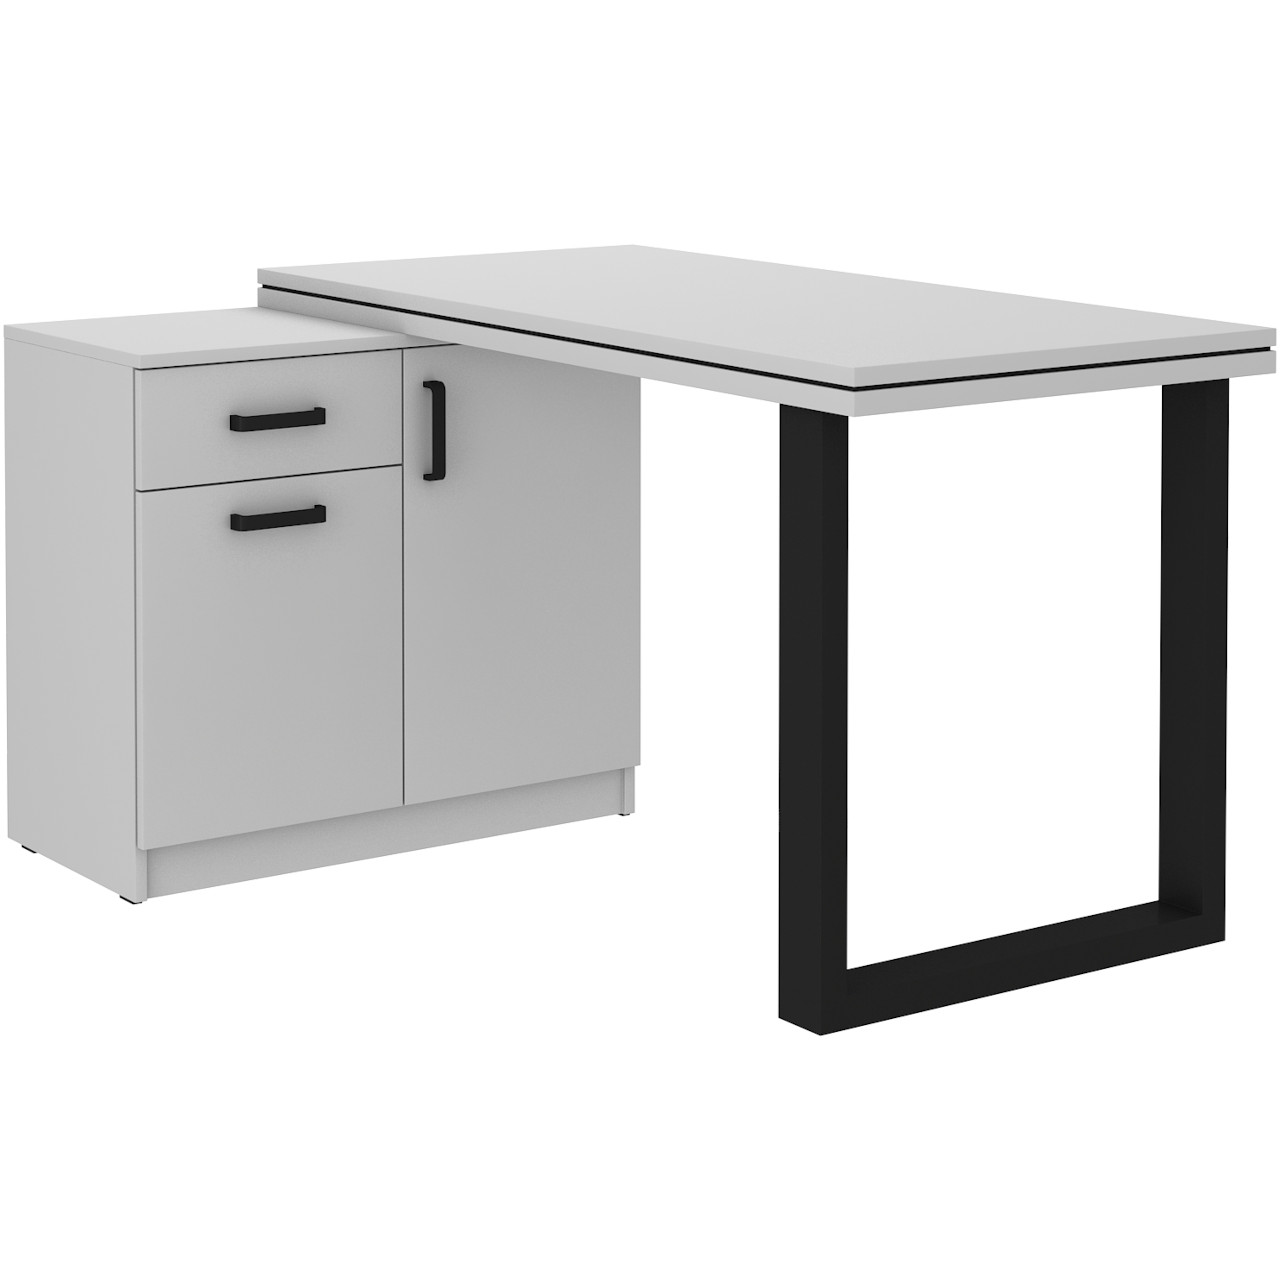 Storage Cabinet with desk MALTA MT16 light grey